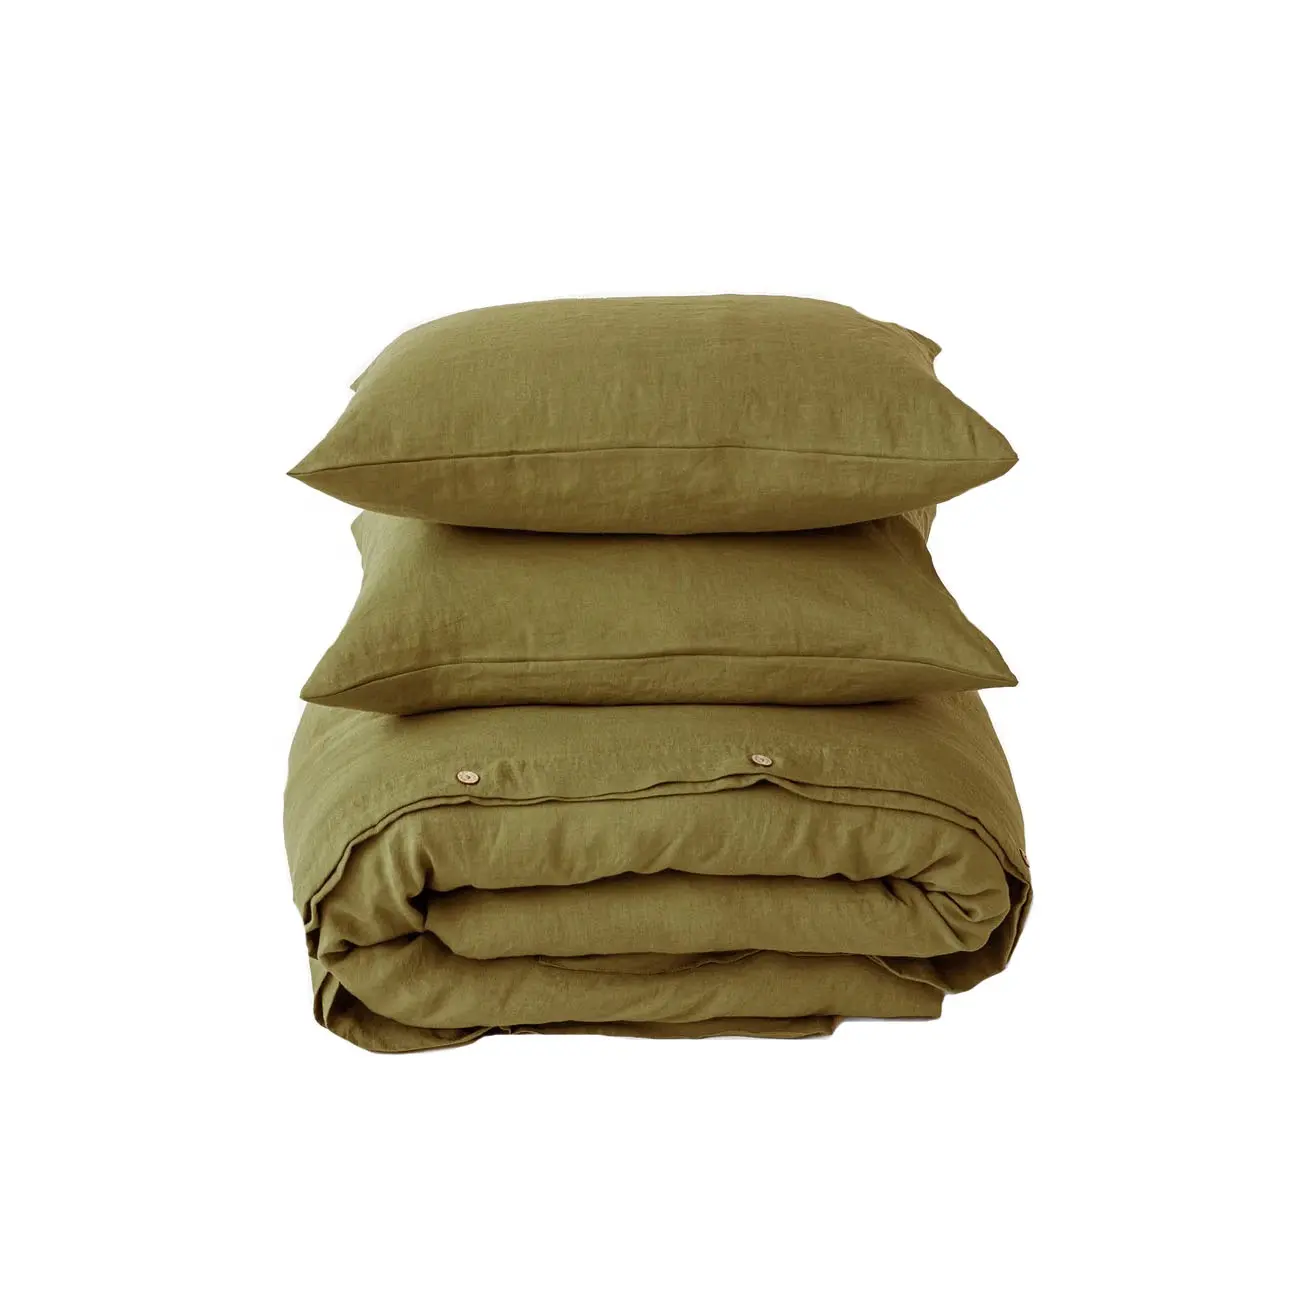 Oeko-tex linen Olive duvet cover pillowcase fitted sheet Flax linen bedding sets